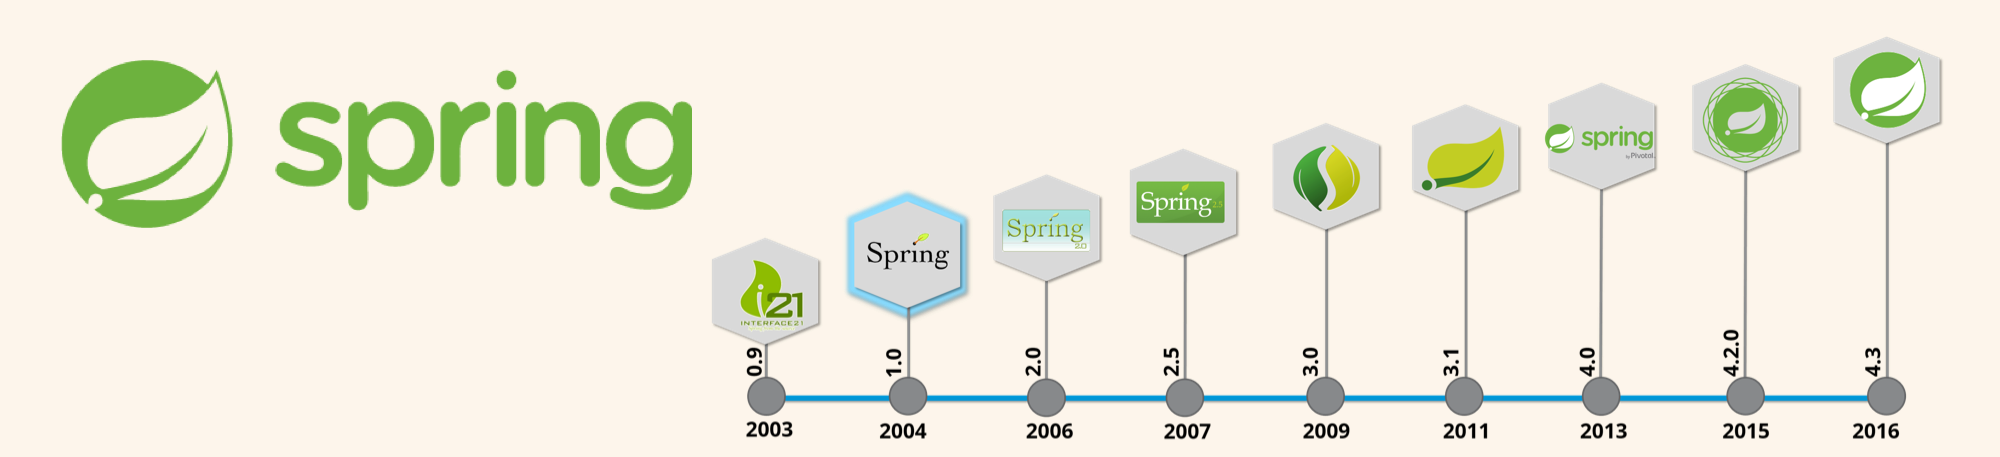 Spring user. Spring MVC IOT. Spring goal. Spring as source.